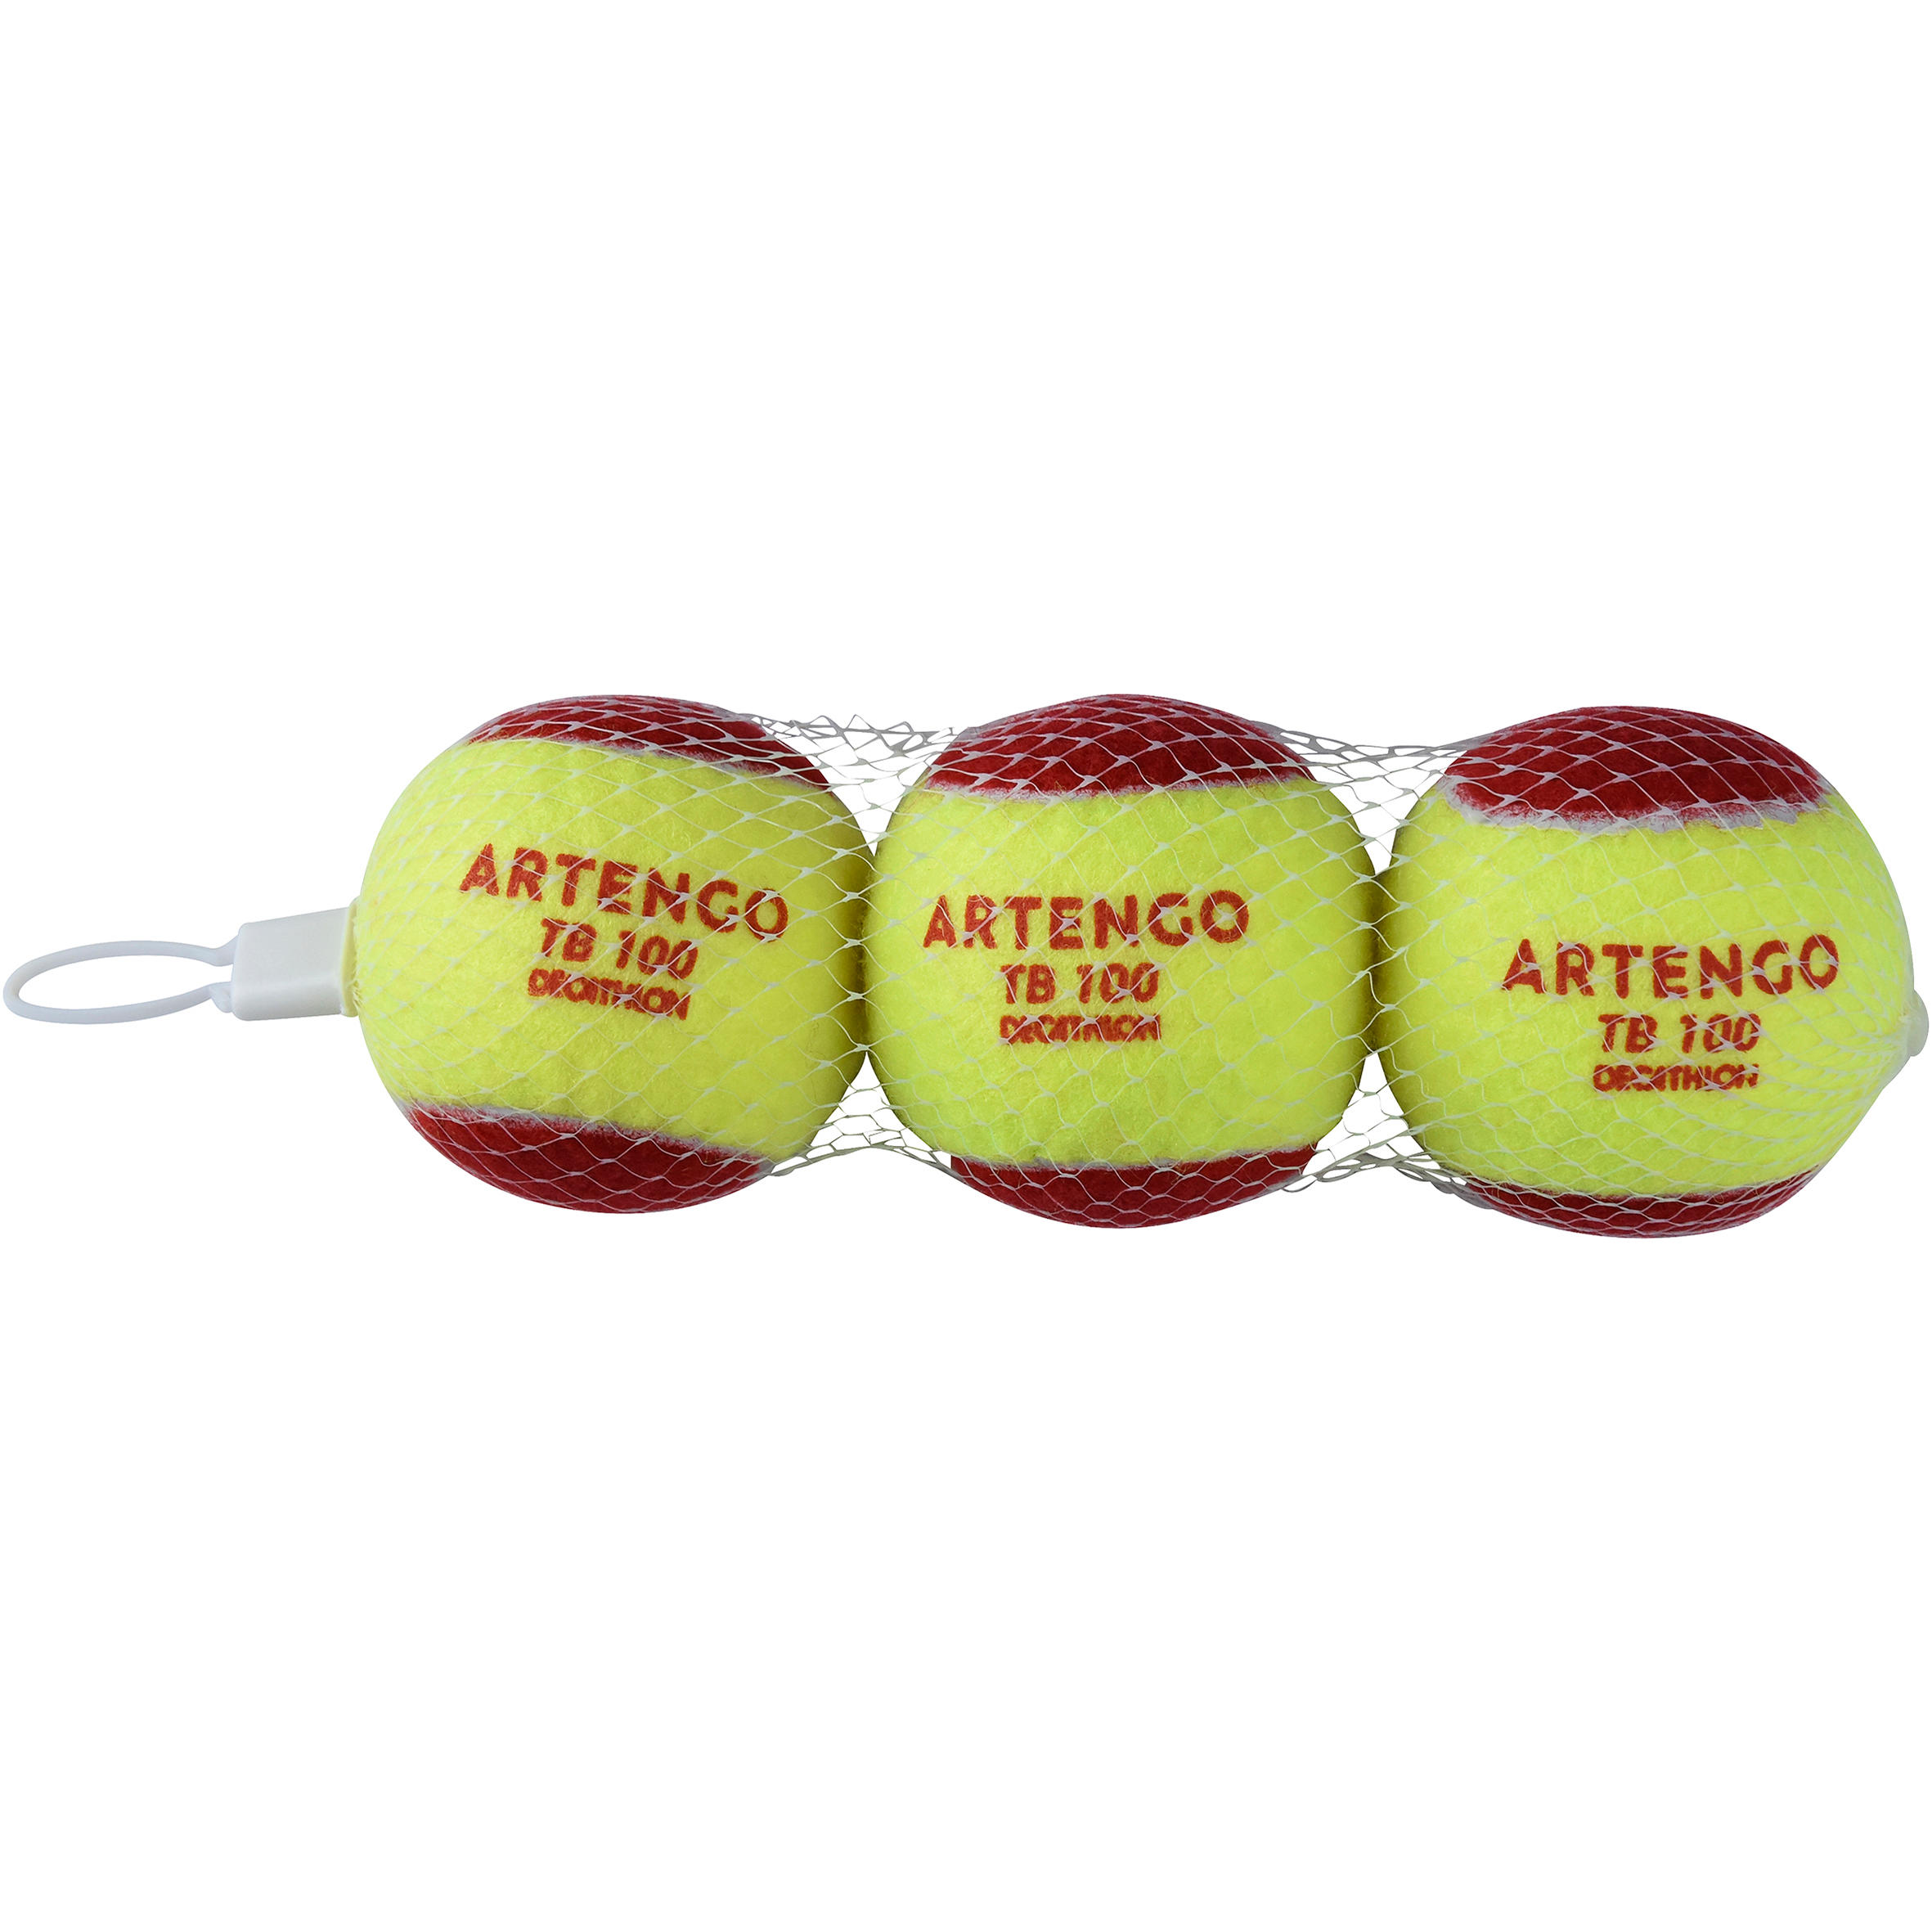 Tennis Balls HK | Professional Tennis 